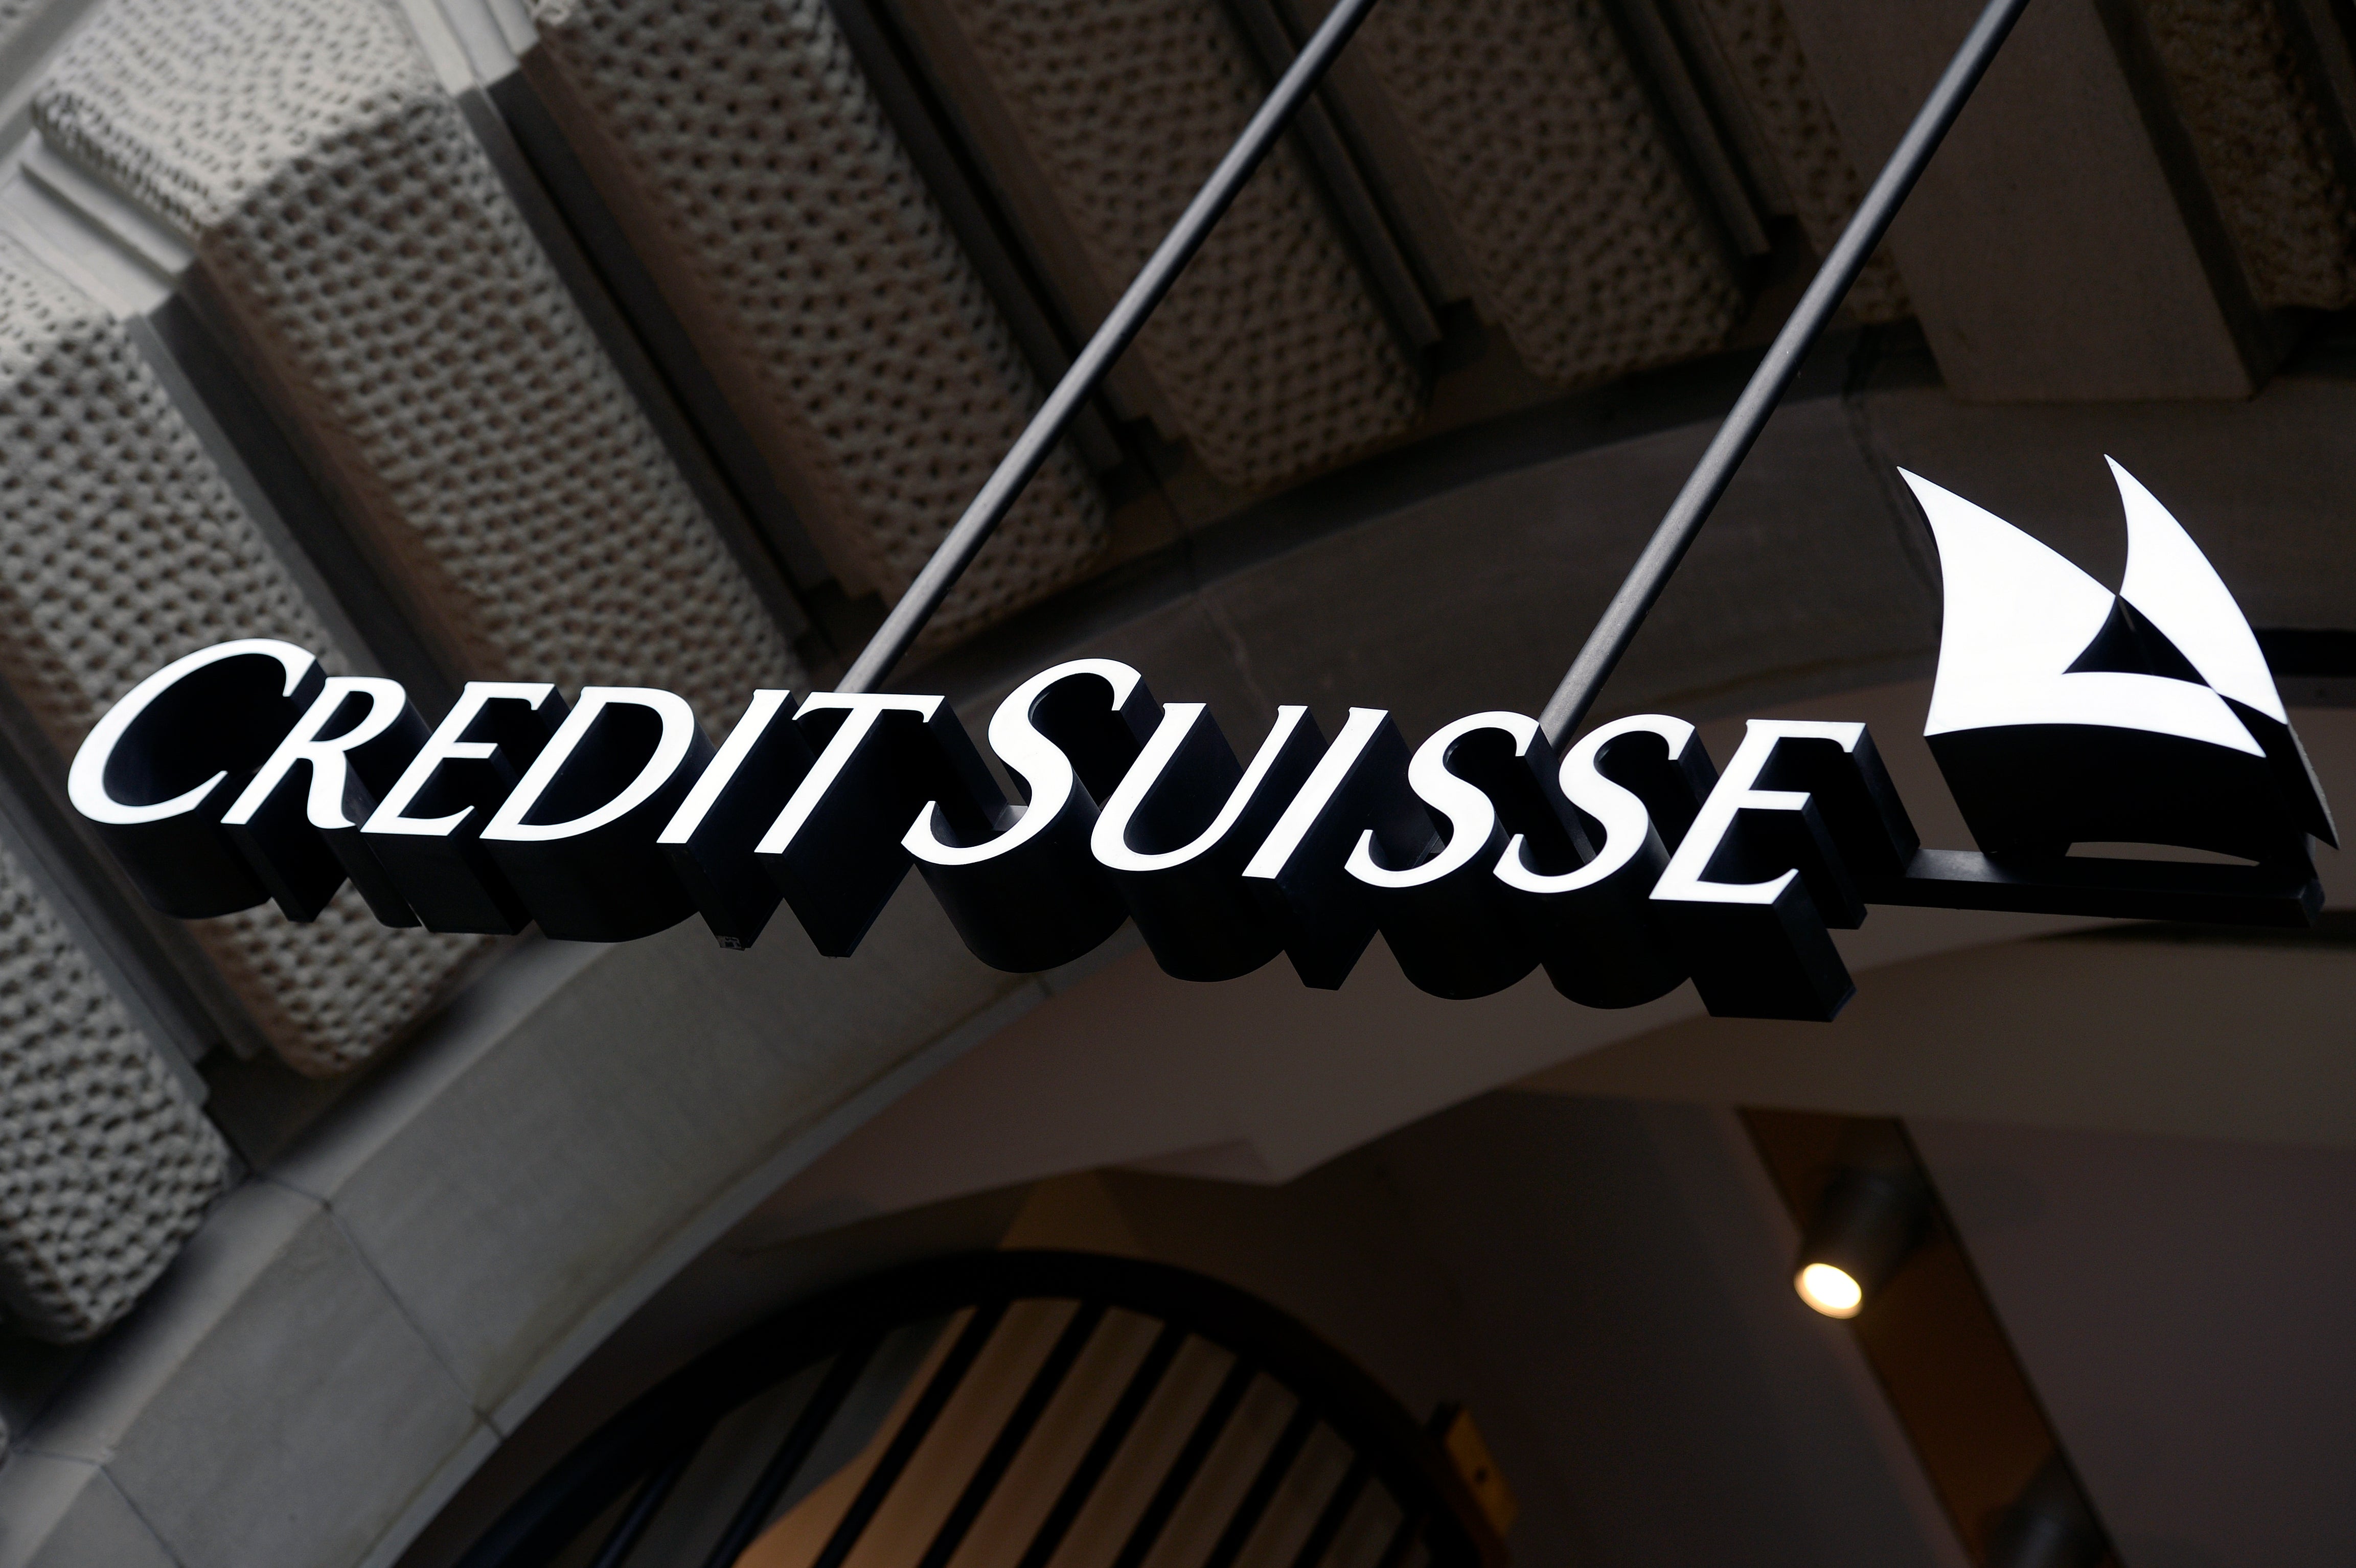 Switzerland Credit Suisse Mozambique